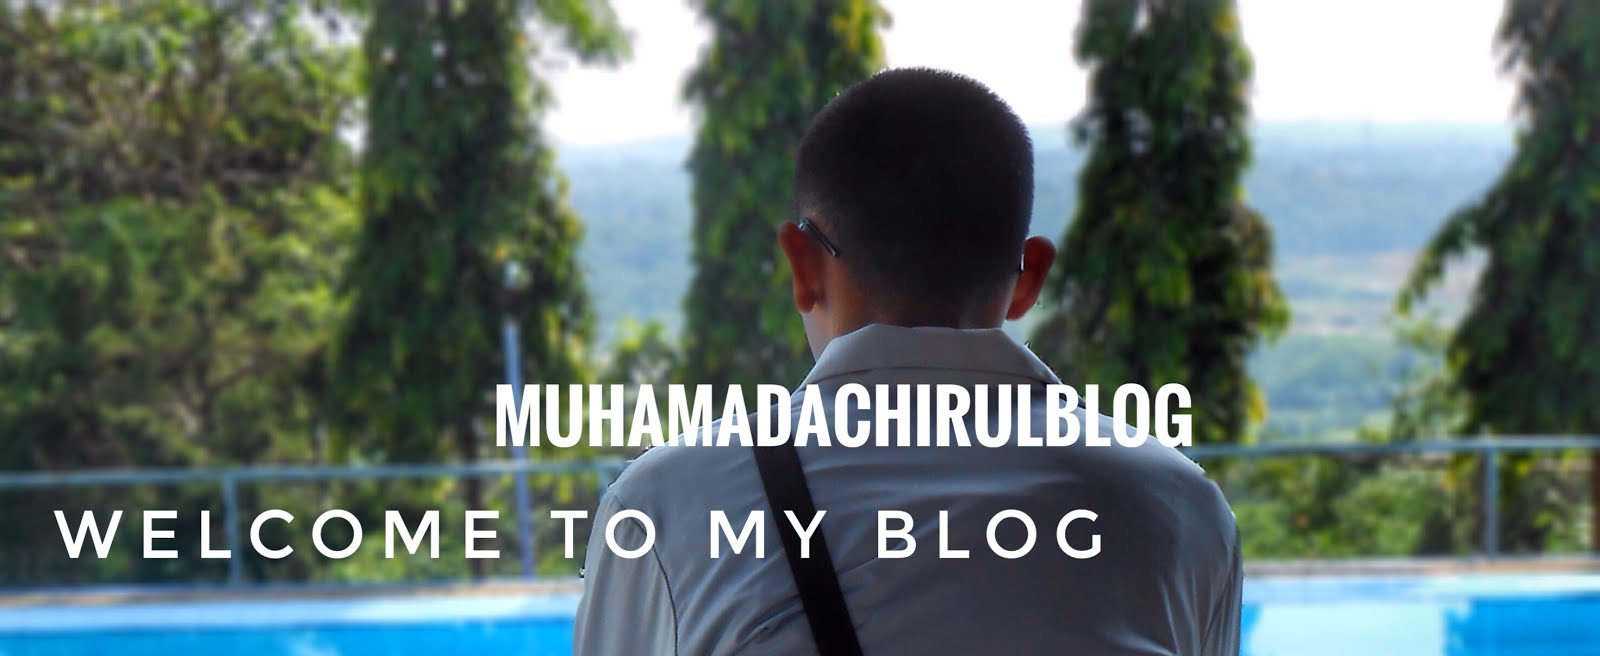 MuhamadAchirulblog